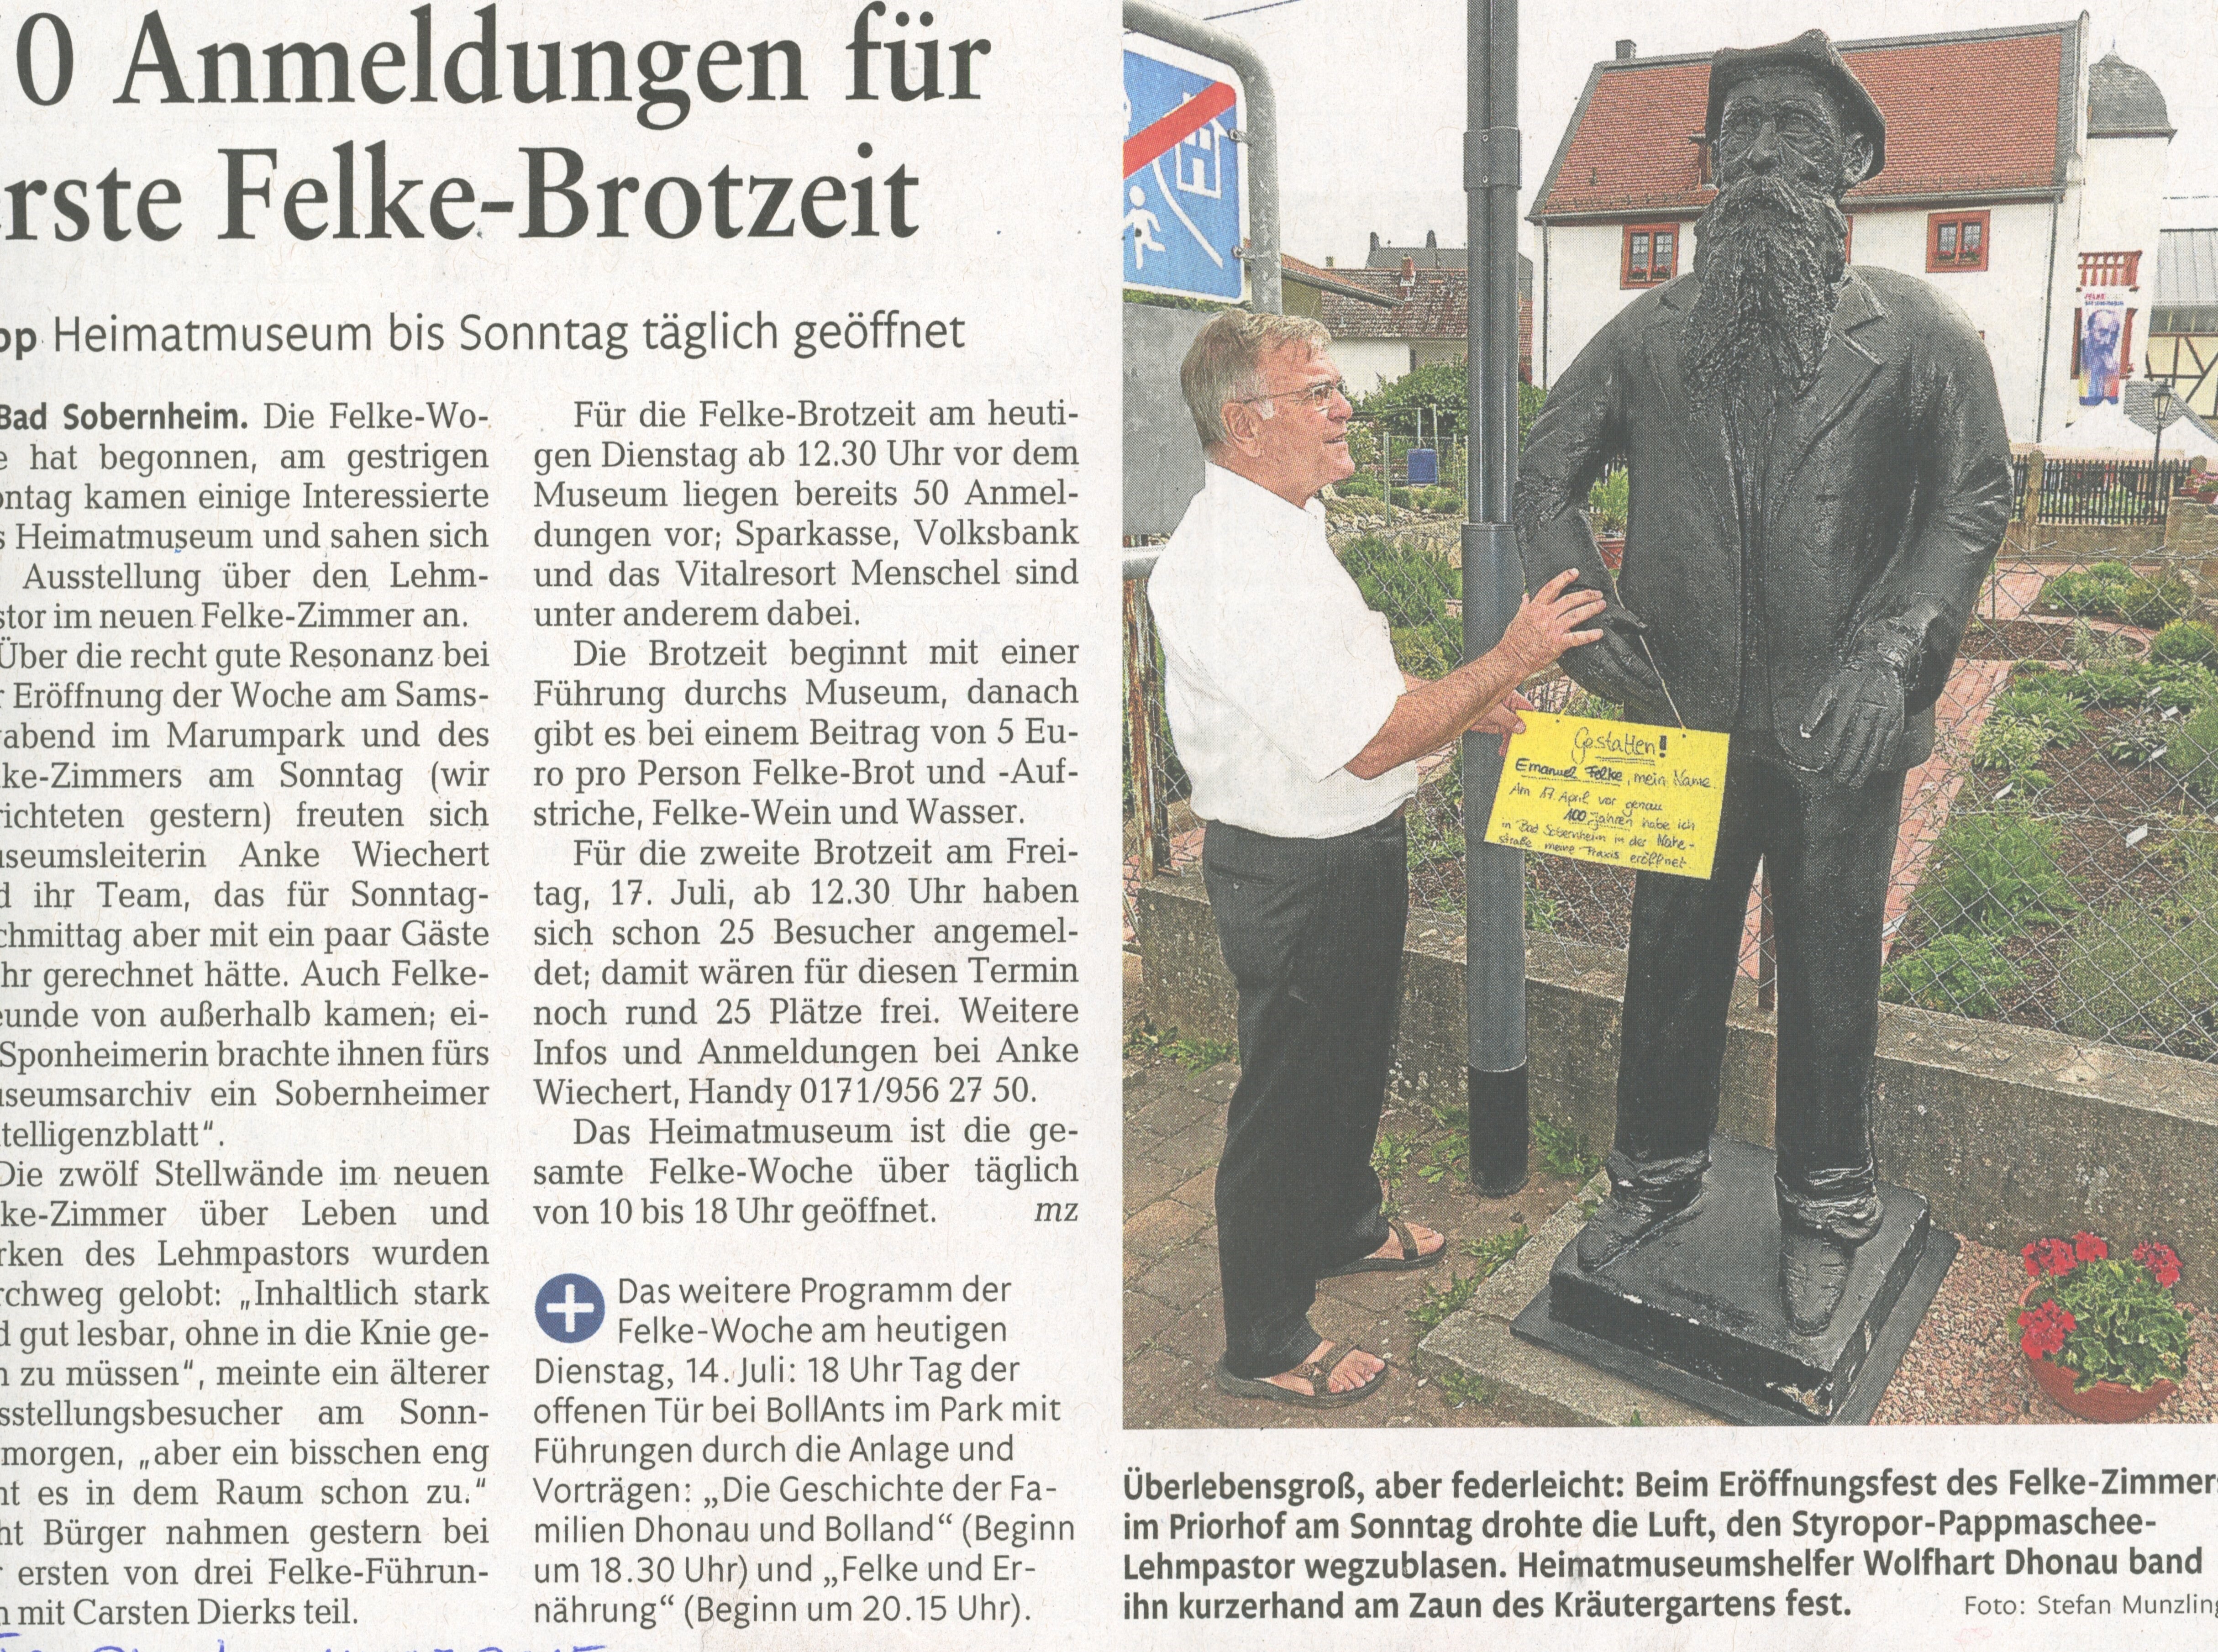 50 Anmeldungen für erste Felke-Brotzeit (Heimatmuseum Bad Sobernheim CC BY-NC-SA)